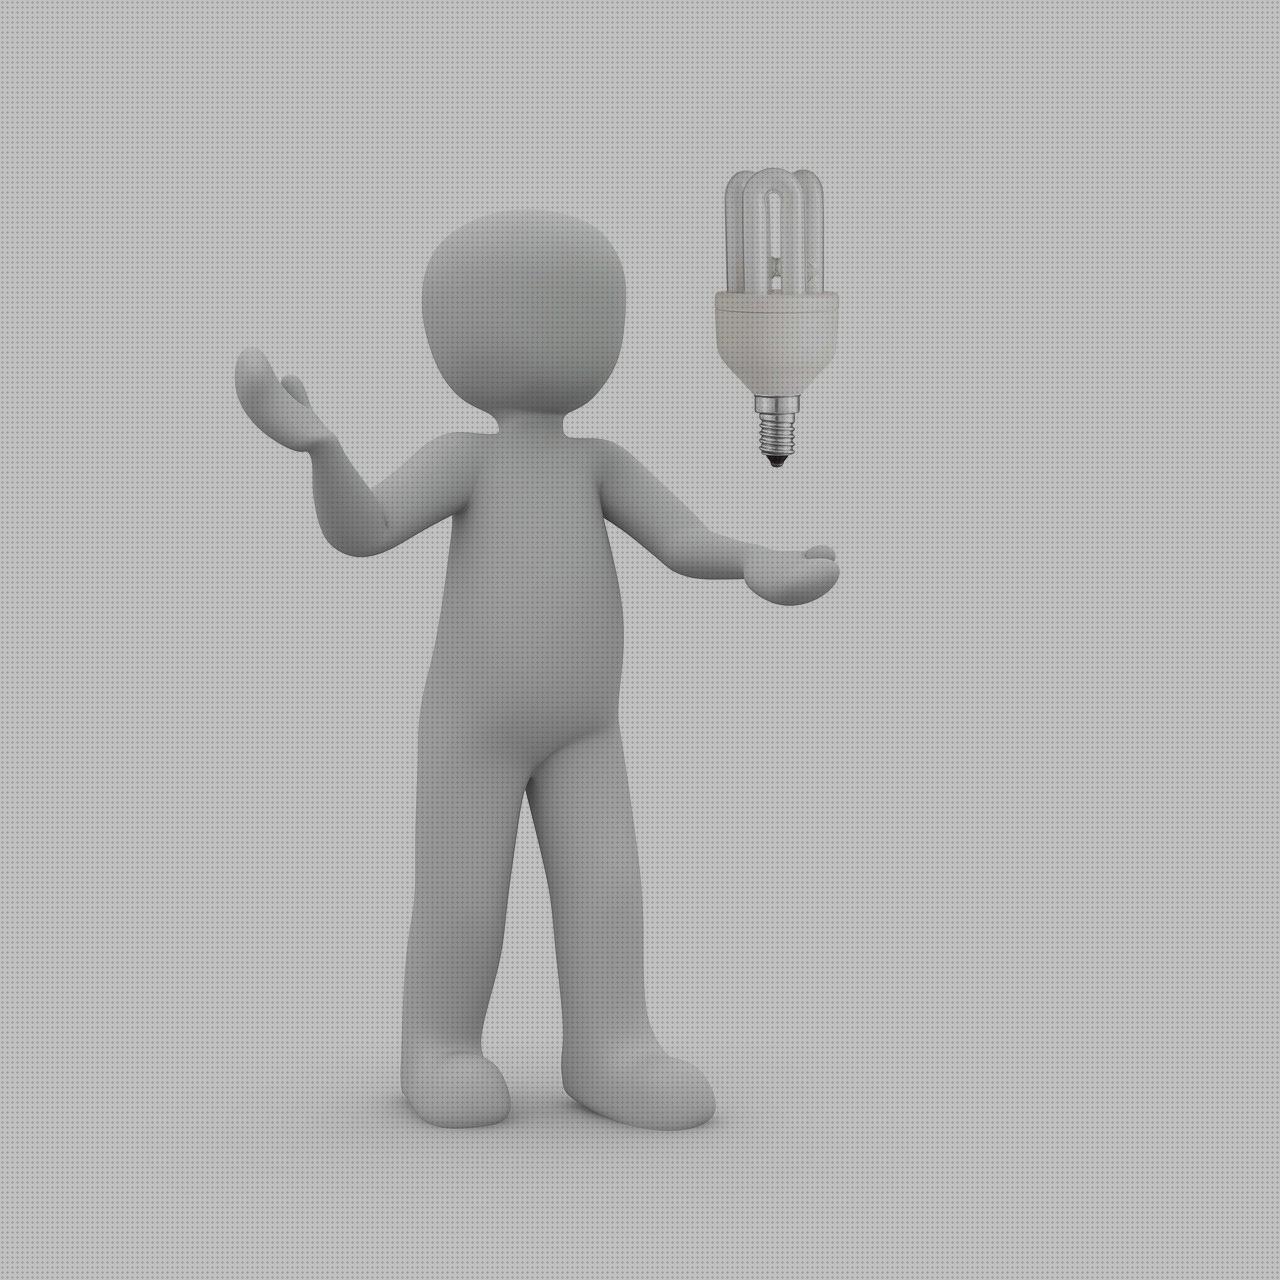 ¿Dónde poder comprar rgb led led lampara led rgb giratoria?